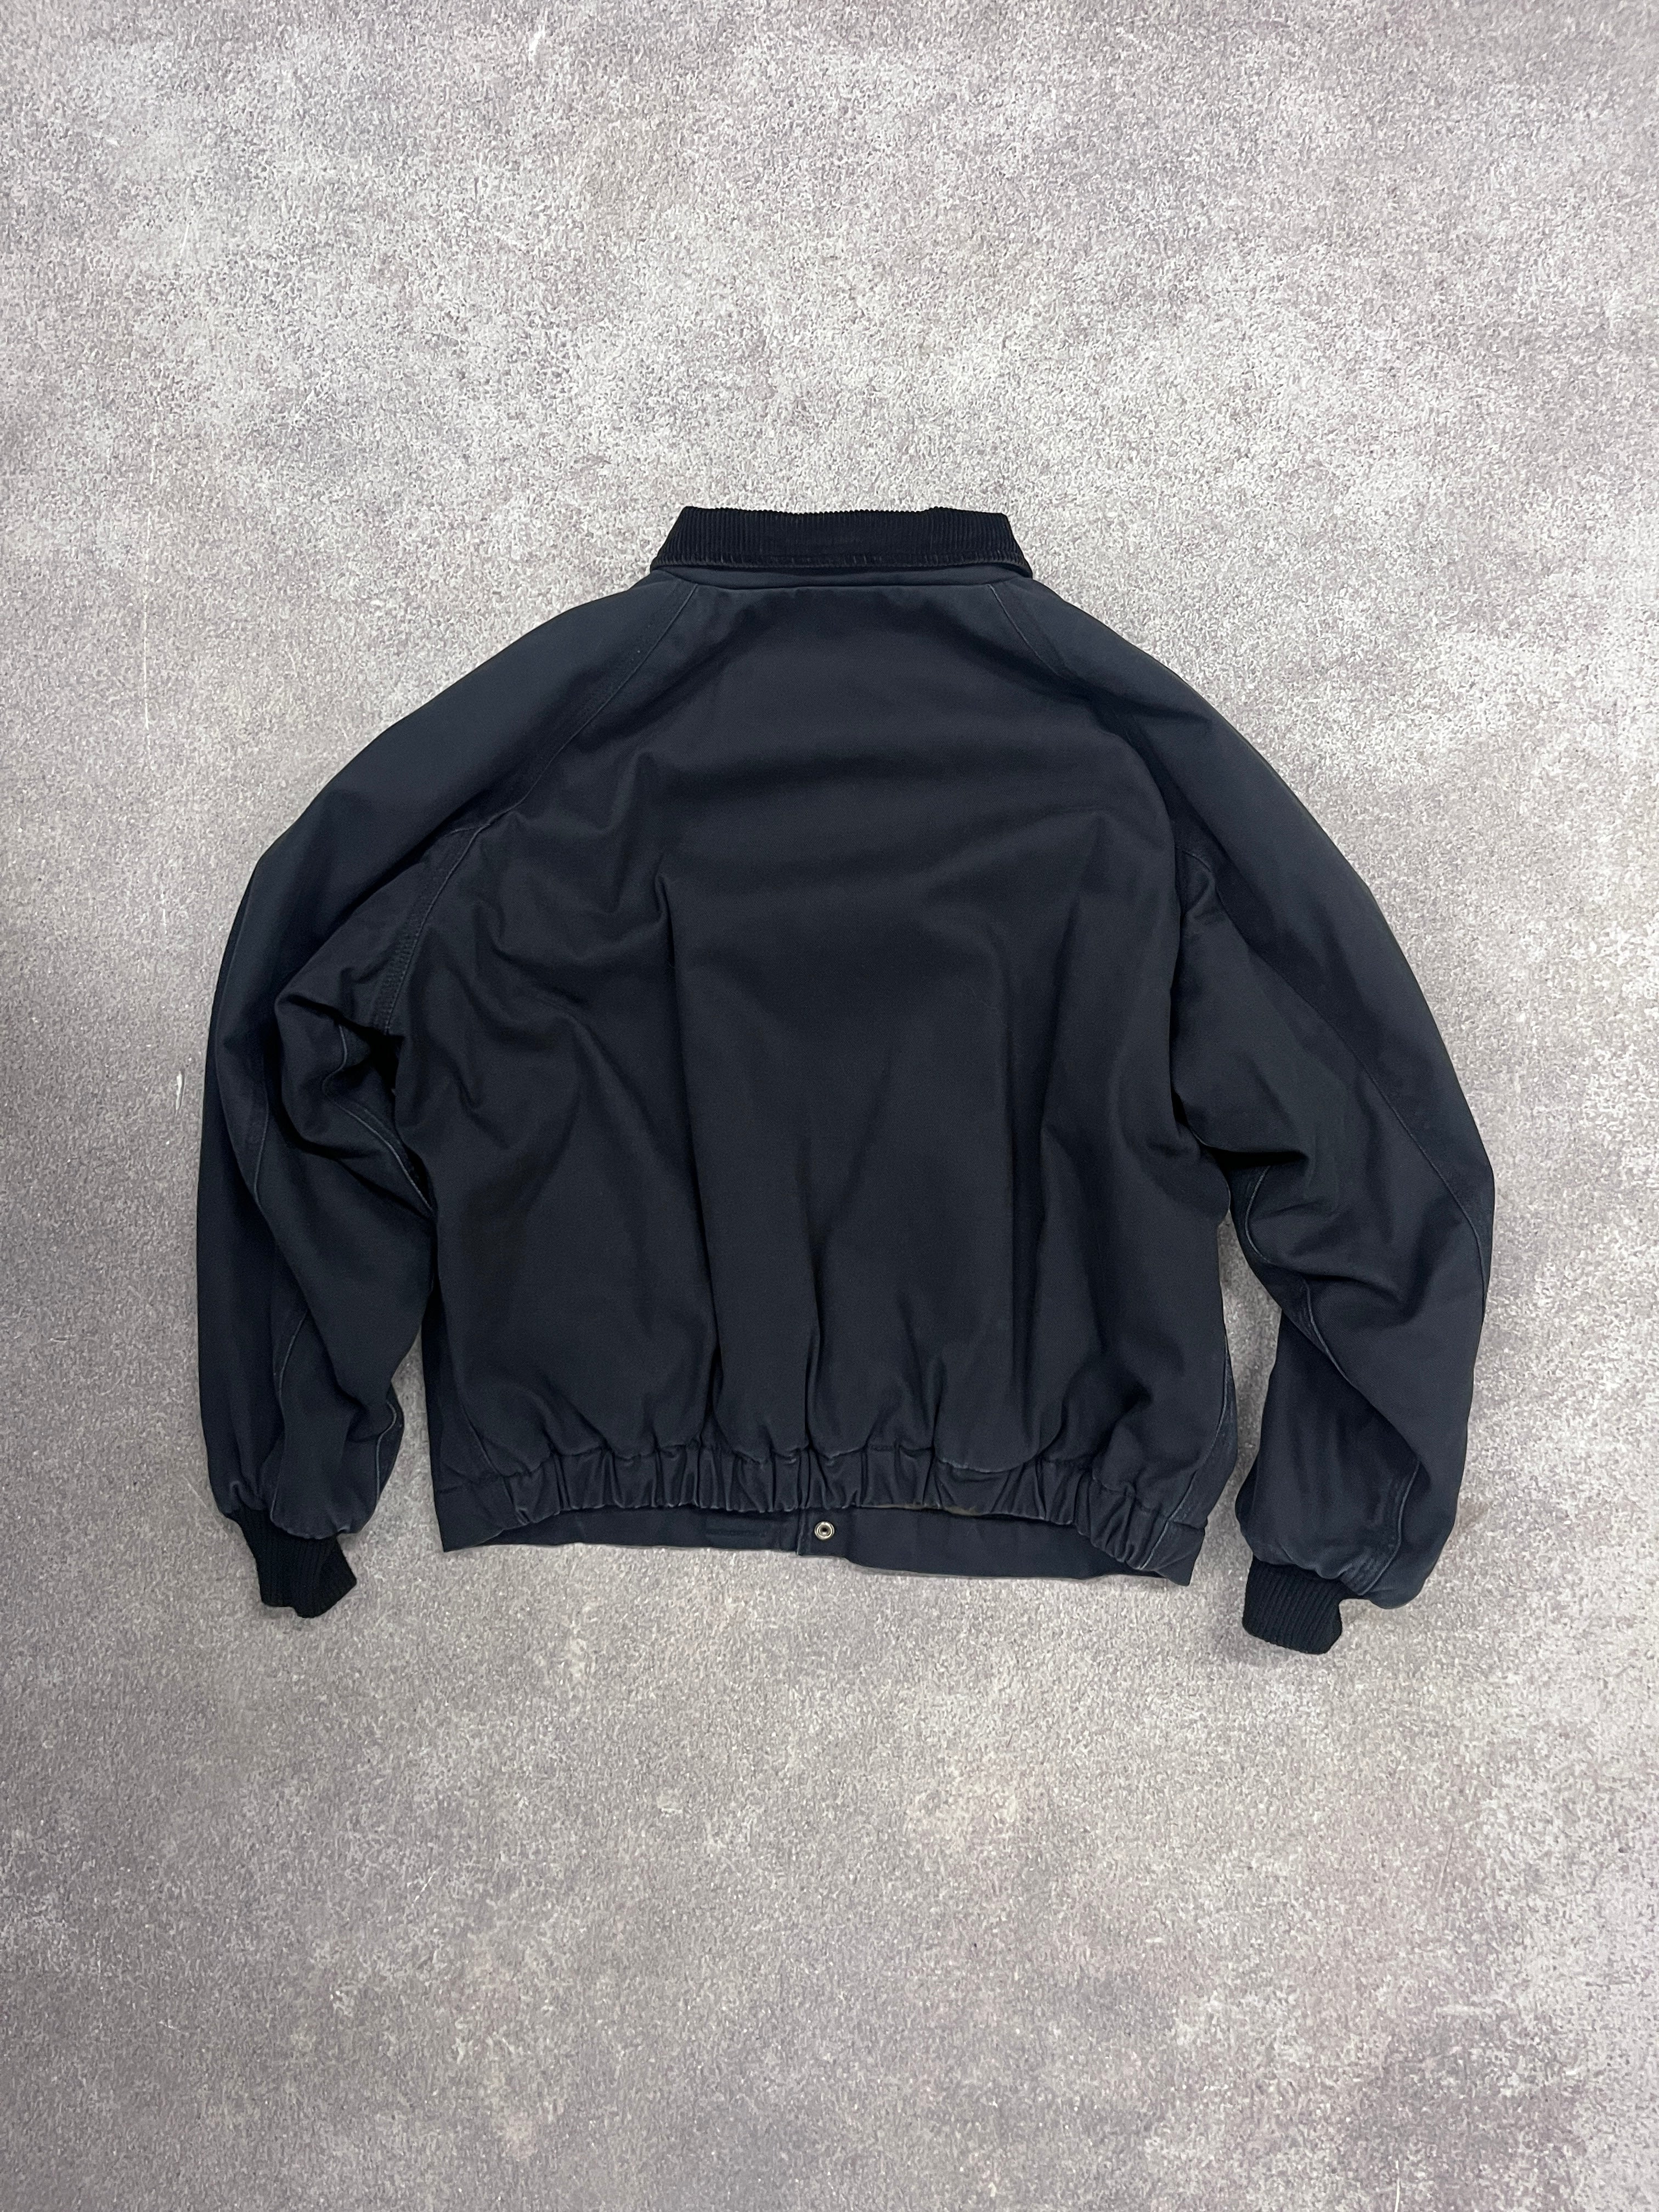 Vintage Workwear Jacket Grey // Small (Boxy) - RHAGHOUSE VINTAGE